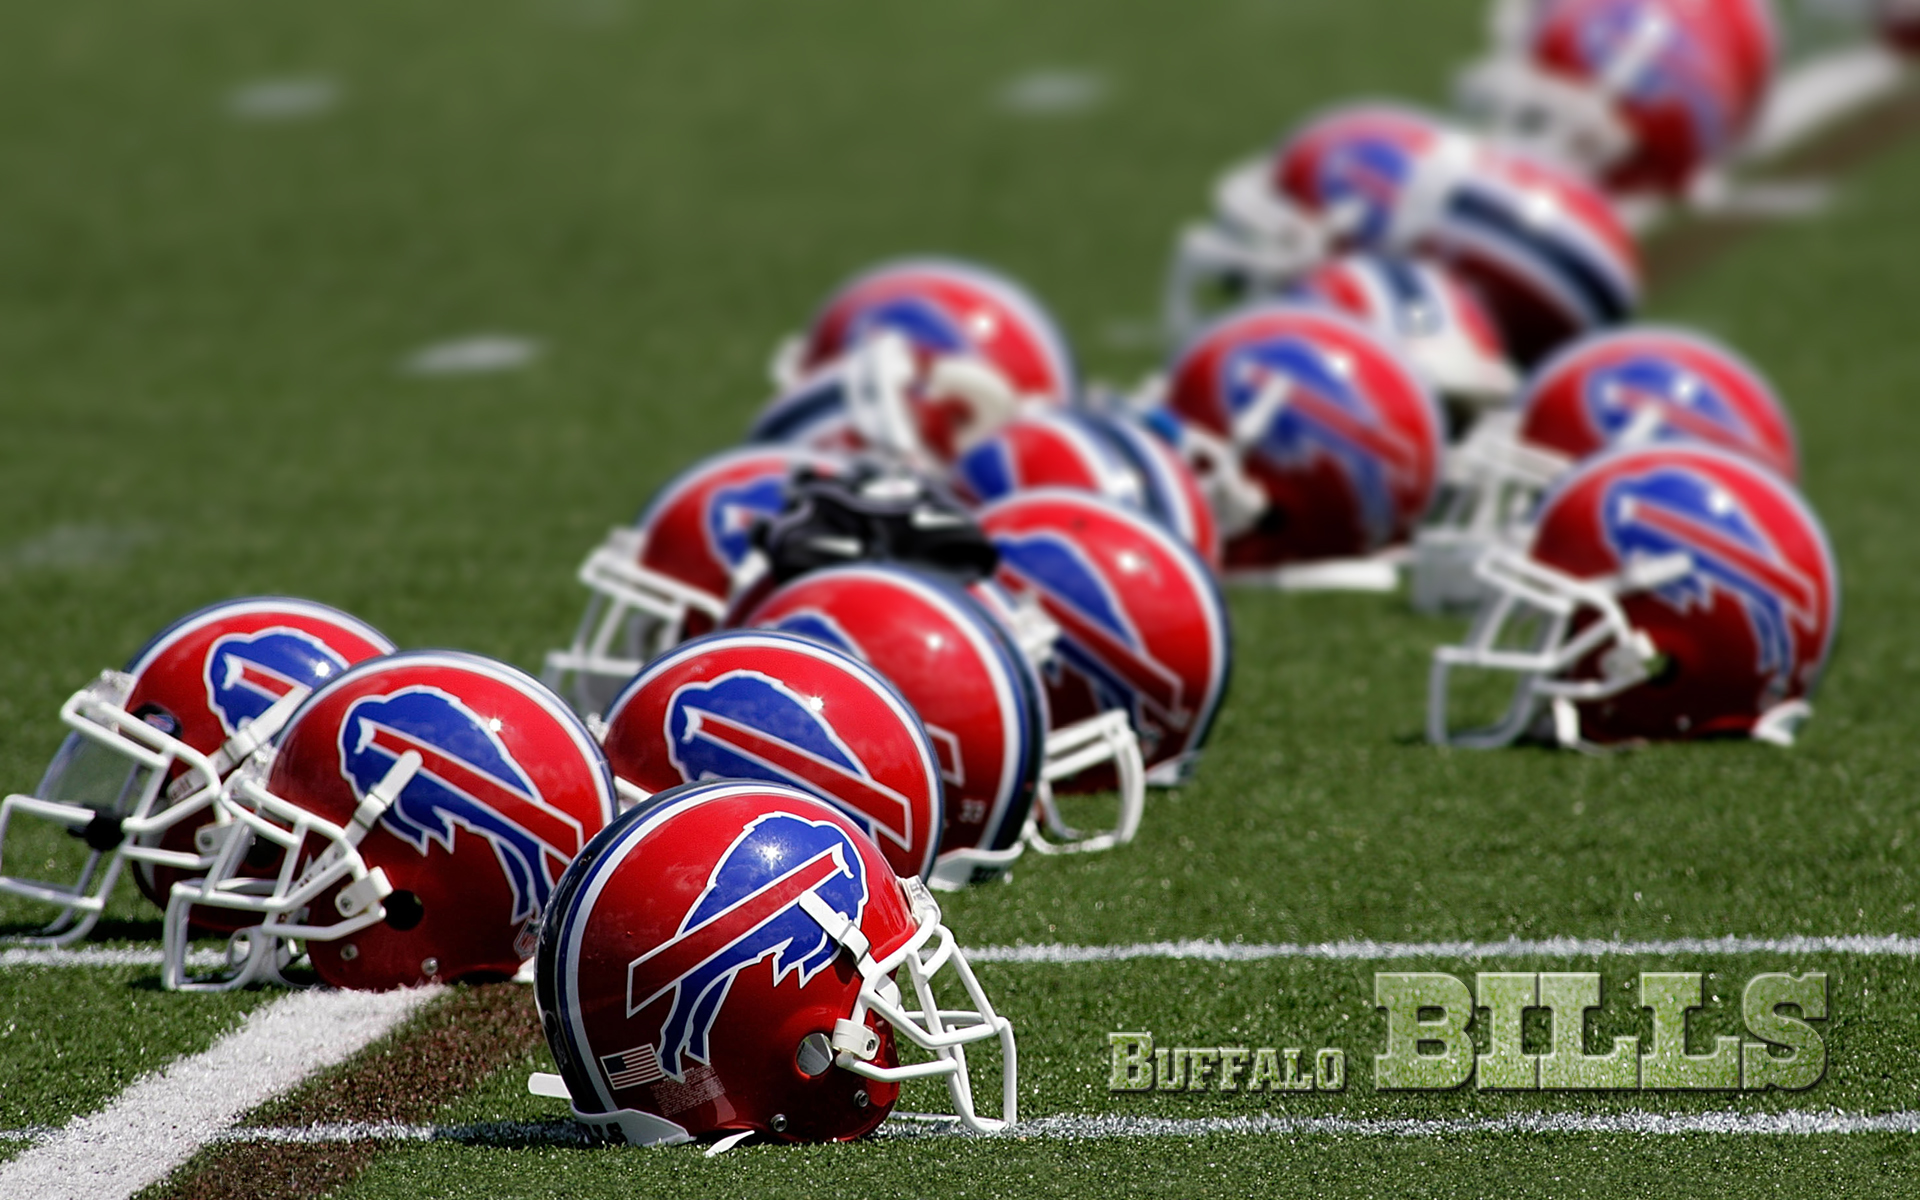 Nfl Buffalo Bills Helmets On The Football Field Grass Wide